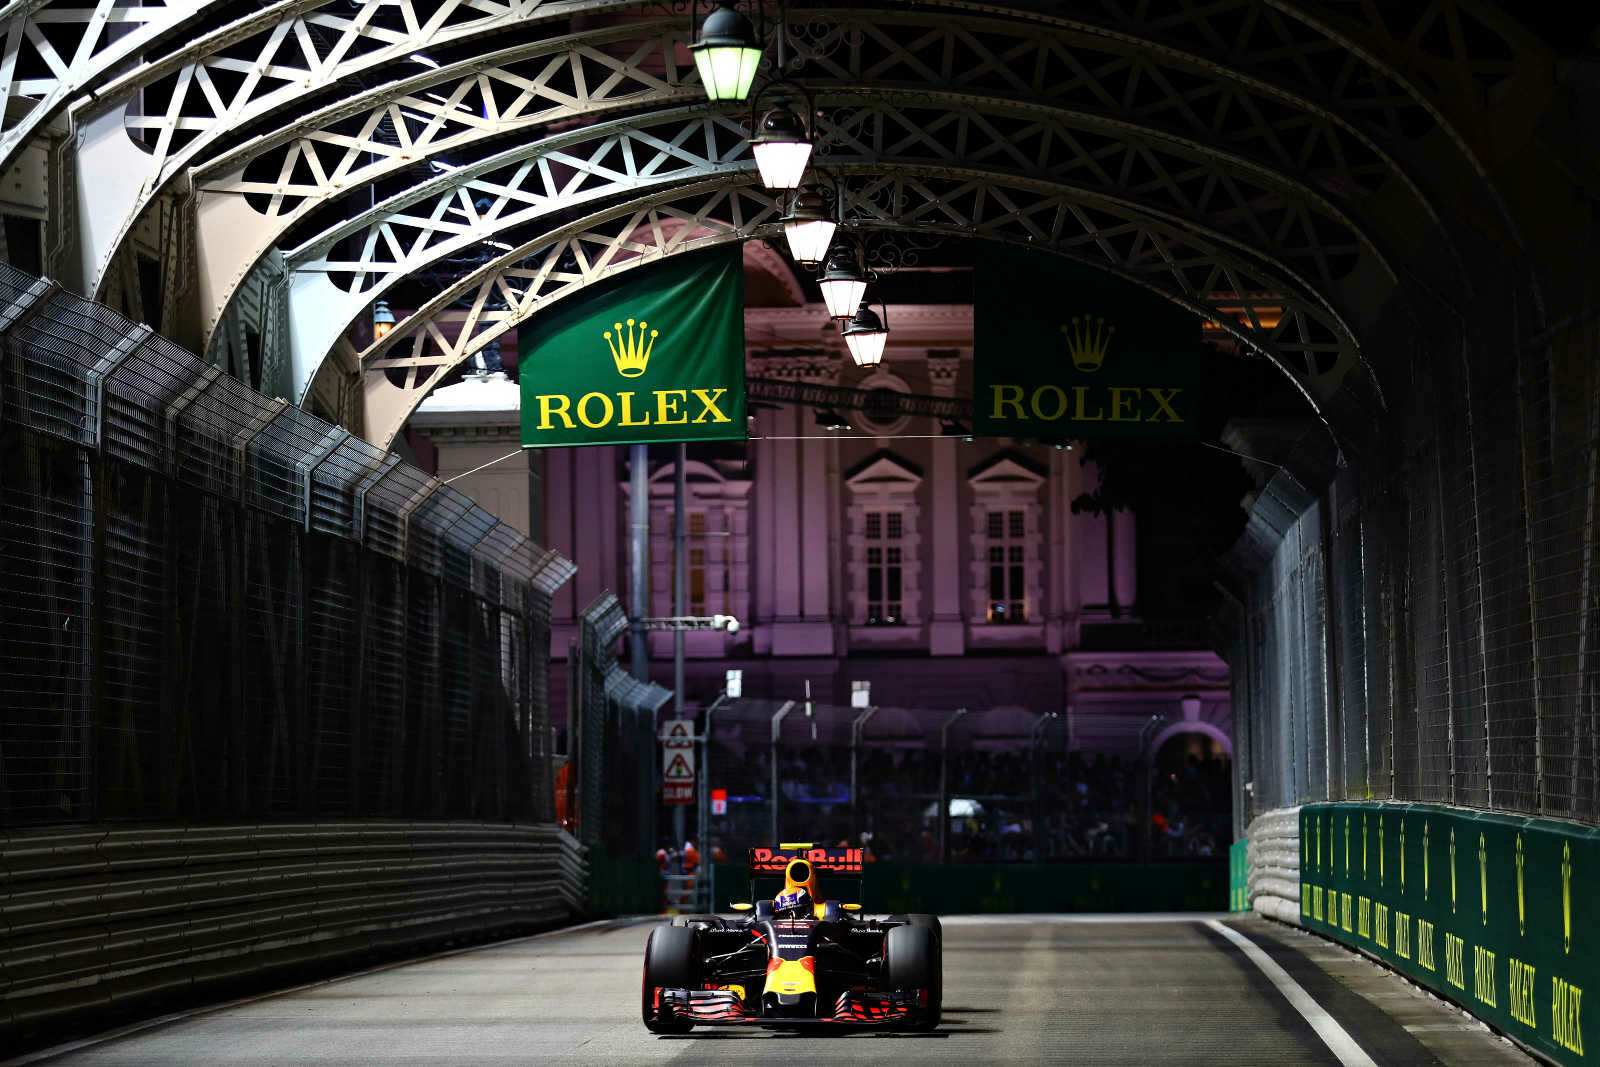 Max_Verstappen_Red_Bull_Racing_F1_Grand_Prix_Singapore_2016_Q